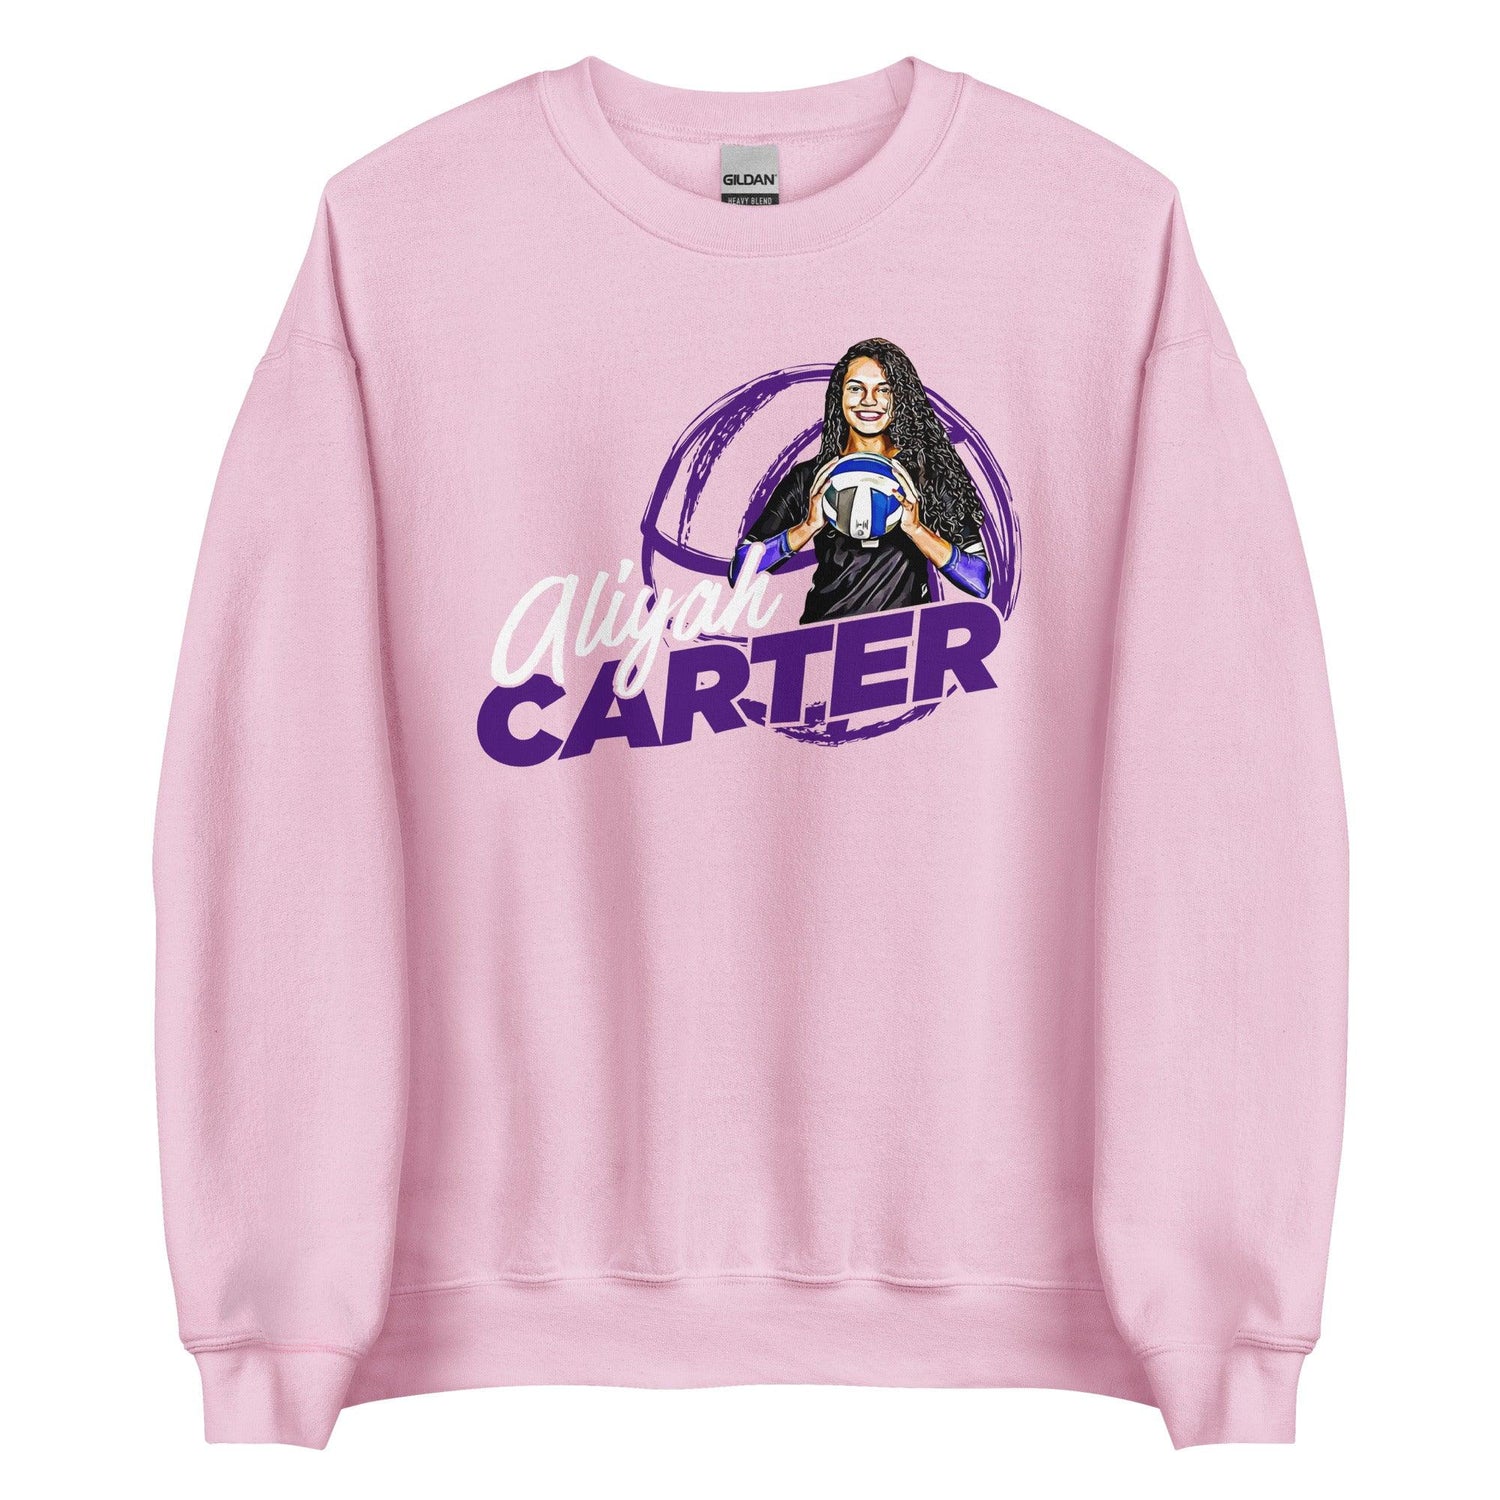 Aliyah Carter "Game Ready" Sweatshirt - Fan Arch